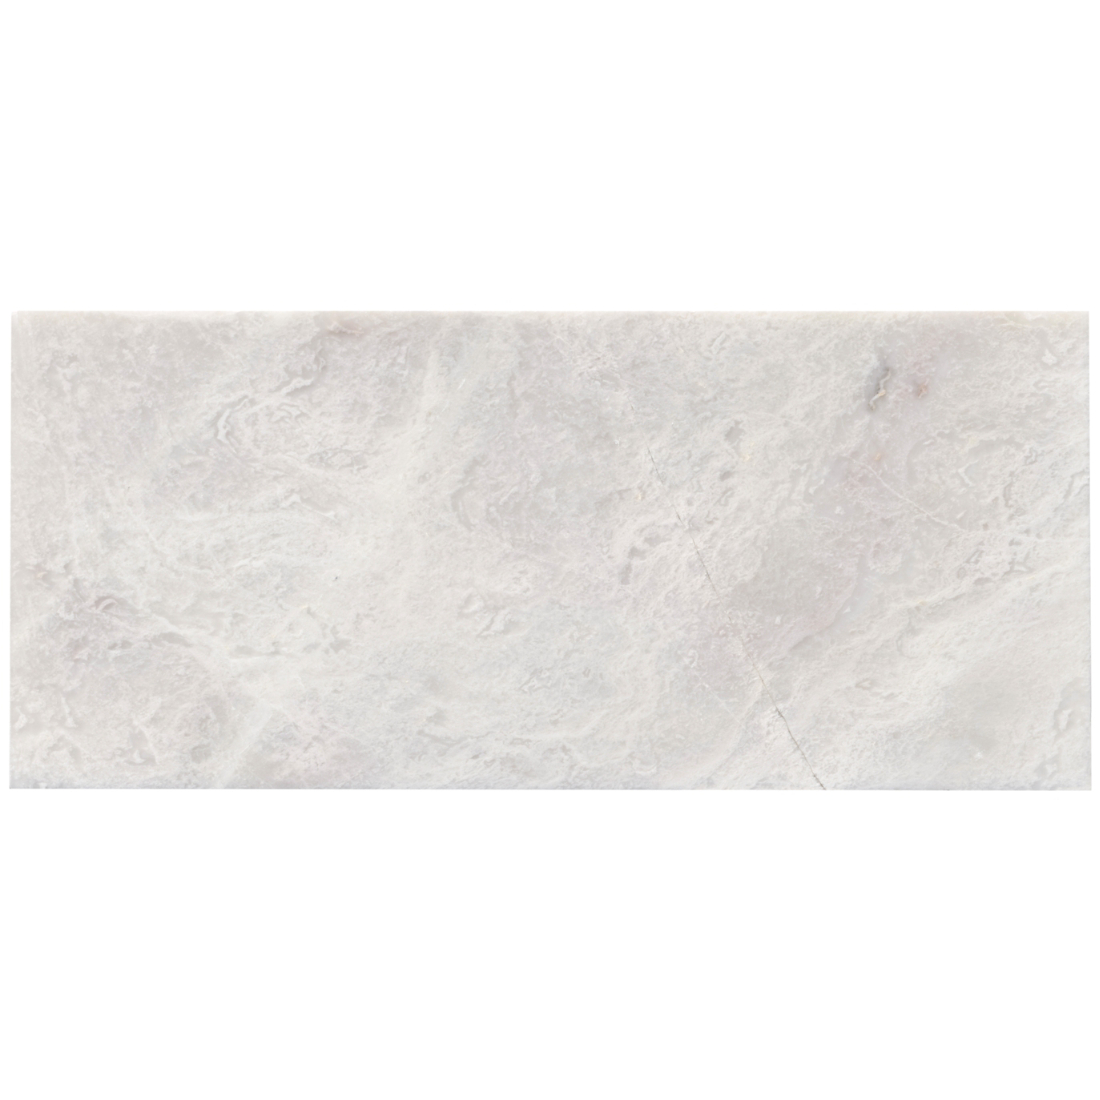 Meram Blanc Carrara Pol 20x45cm